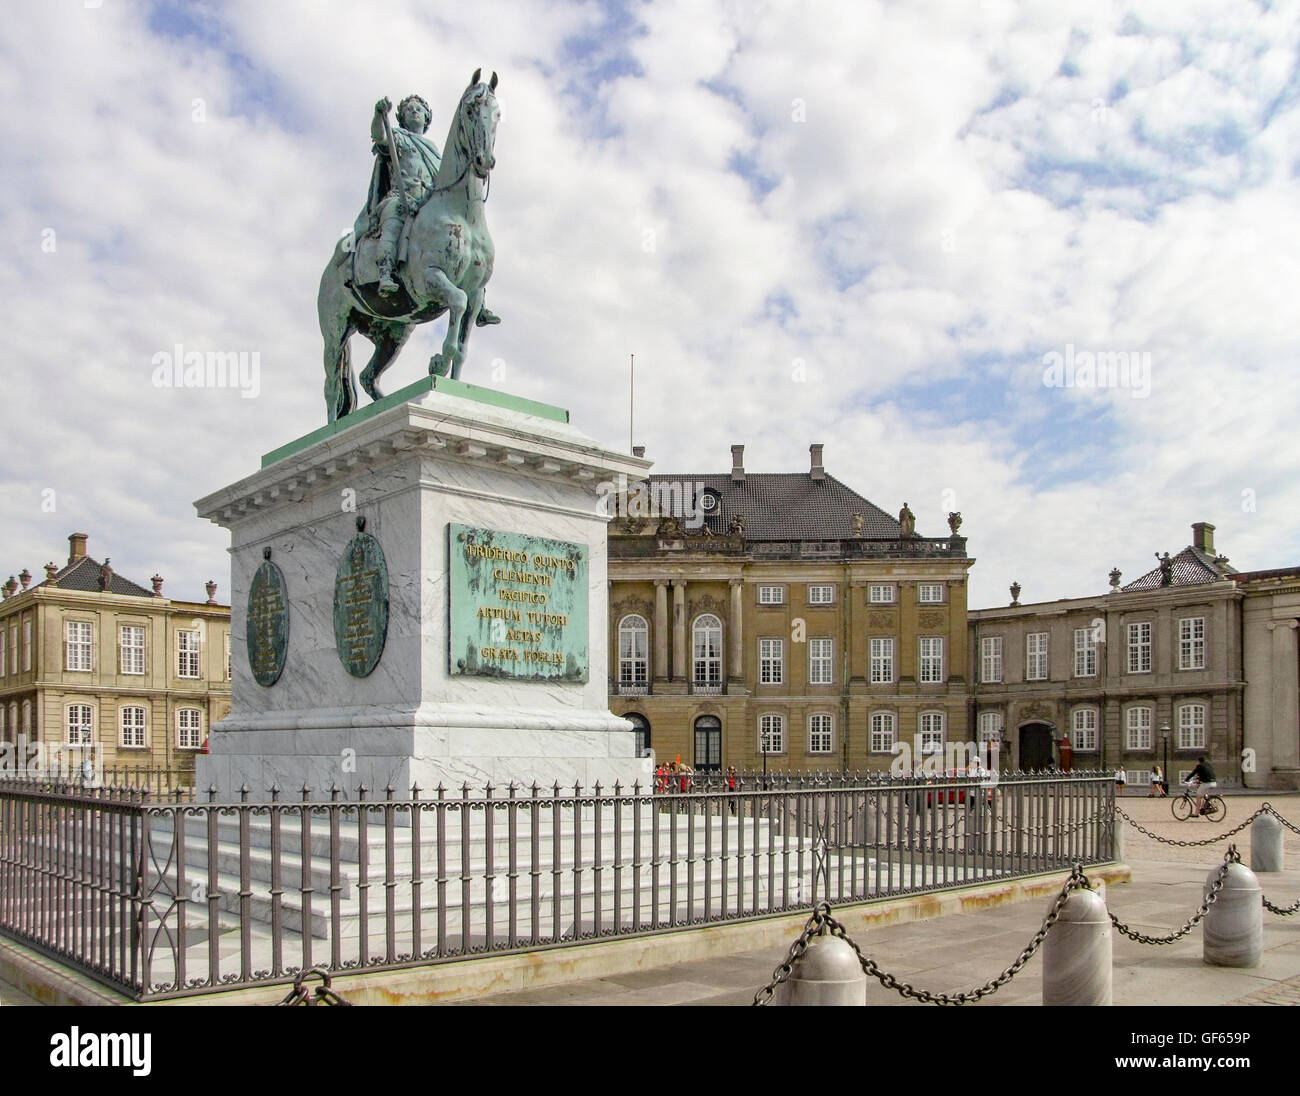 scenery around Amalienborg with statue of King Frederik Copenhagen, the capital city of Denmark Stock Photo